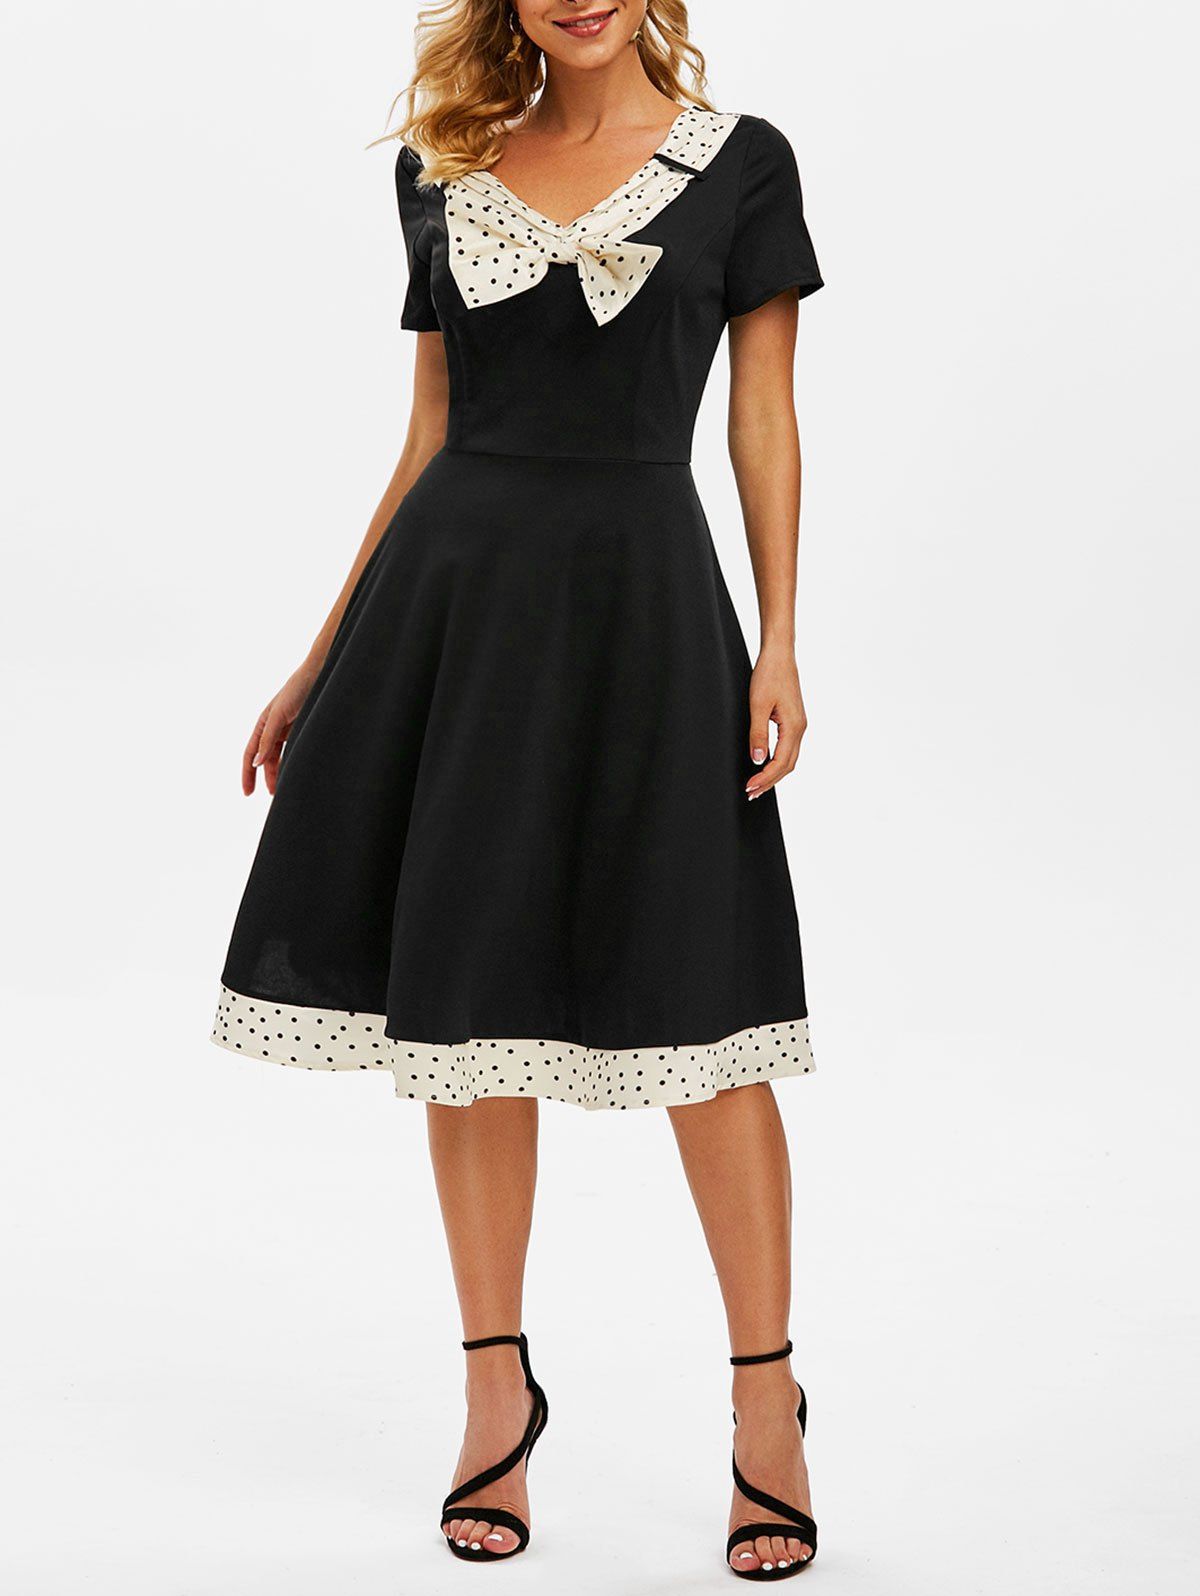 Bowknot Polka Dot V Neck Vintage Dress - BLACK S